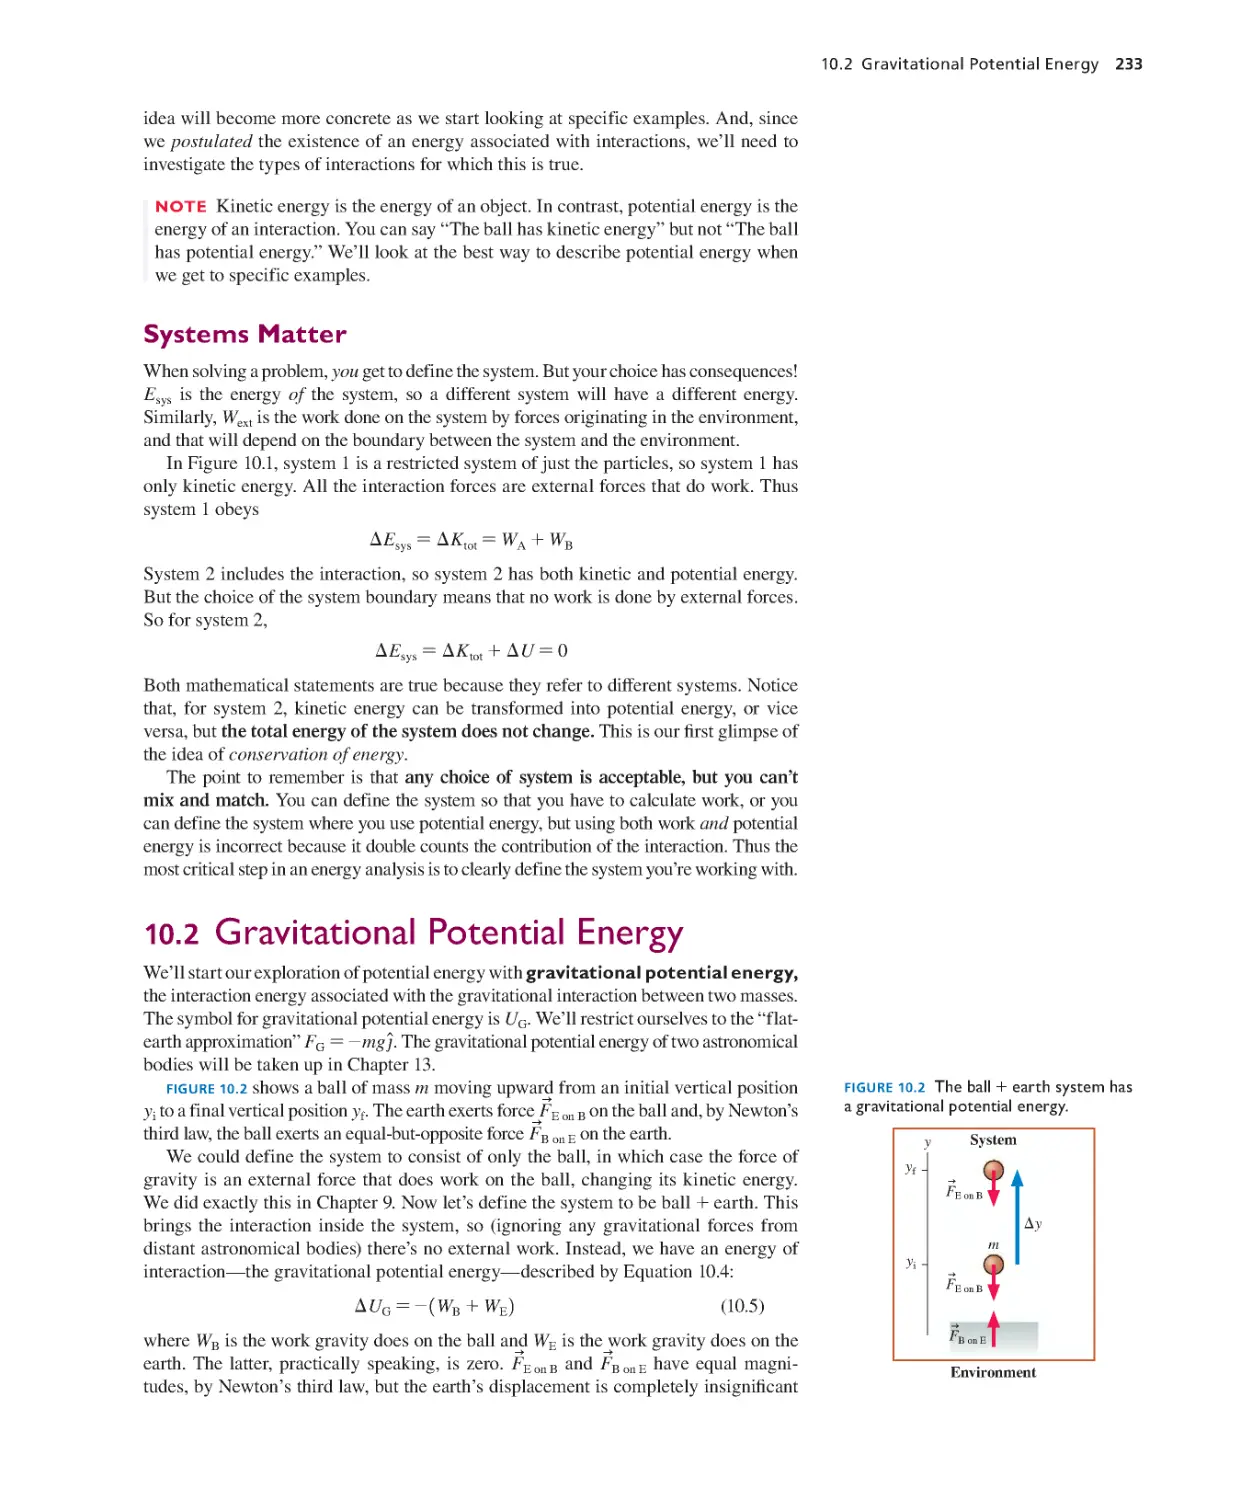 10.2. Gravitational Potential Energy